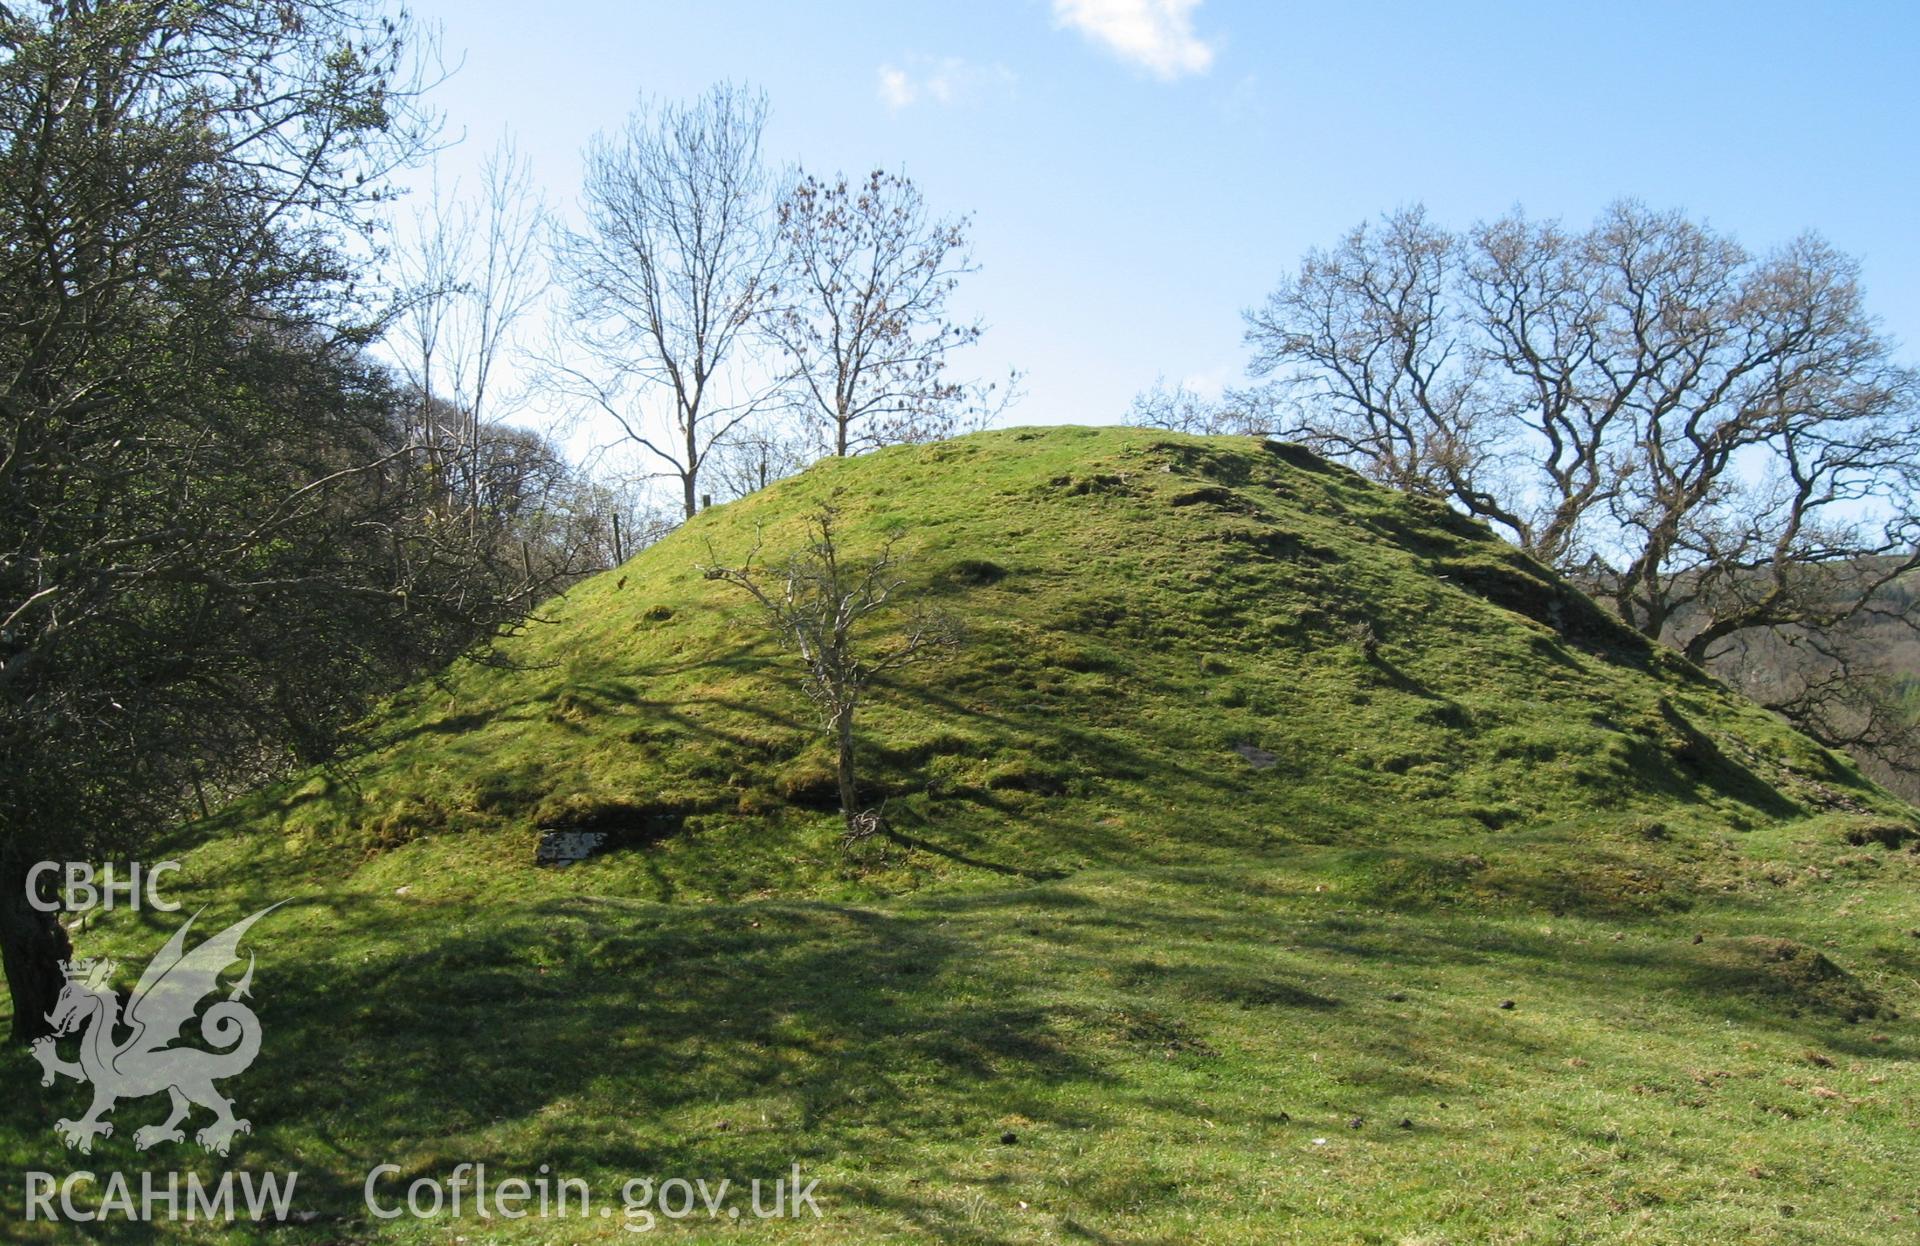 Colour photo of Aberedw Castle Mound, taken by Paul R. Davis, 24th January 2007.